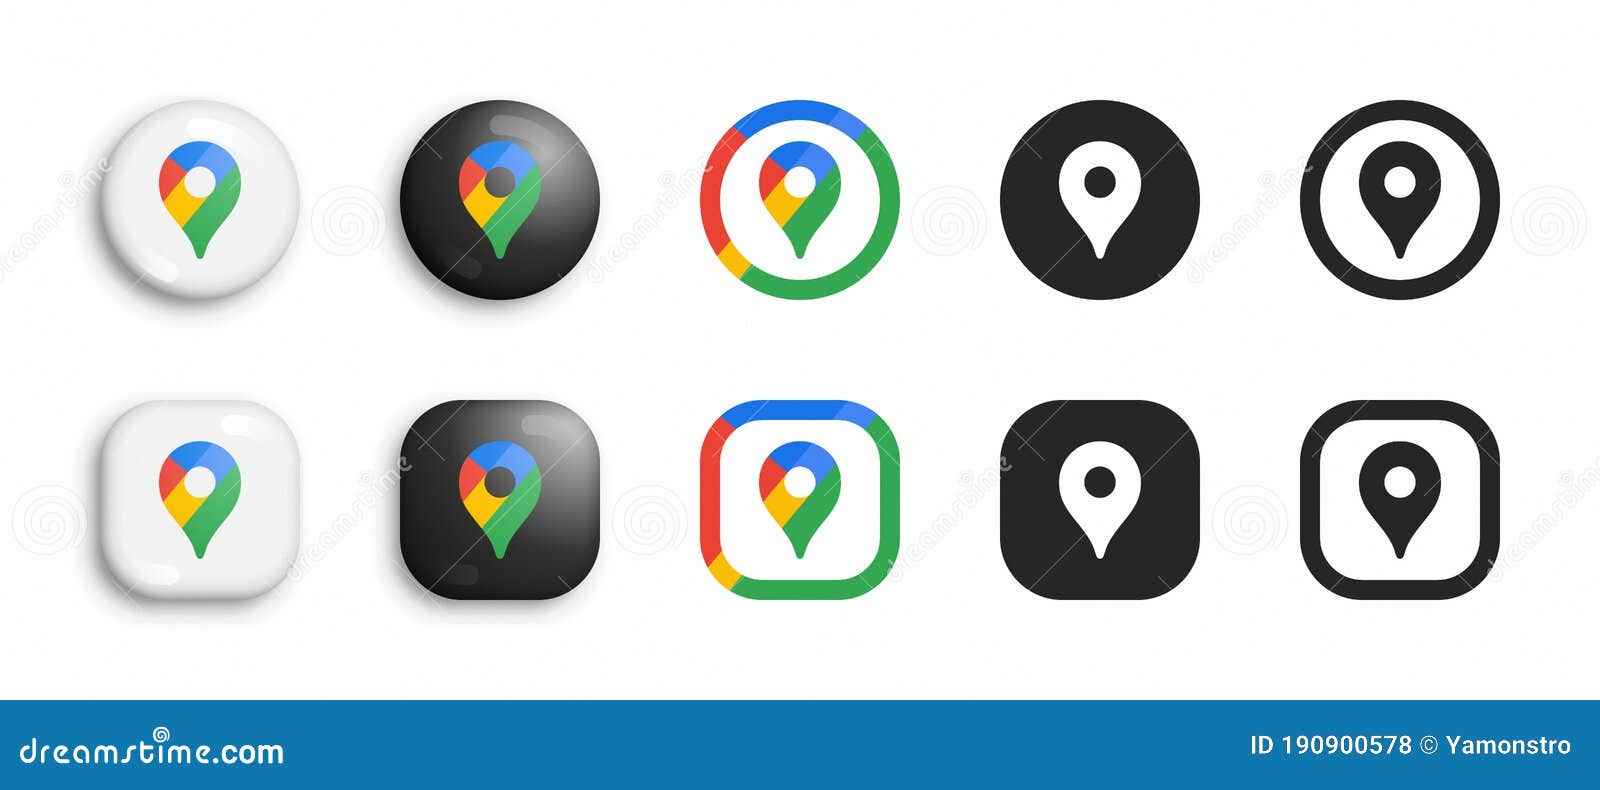 Google Maps Logo – PNG e Vetor – Download de Logo